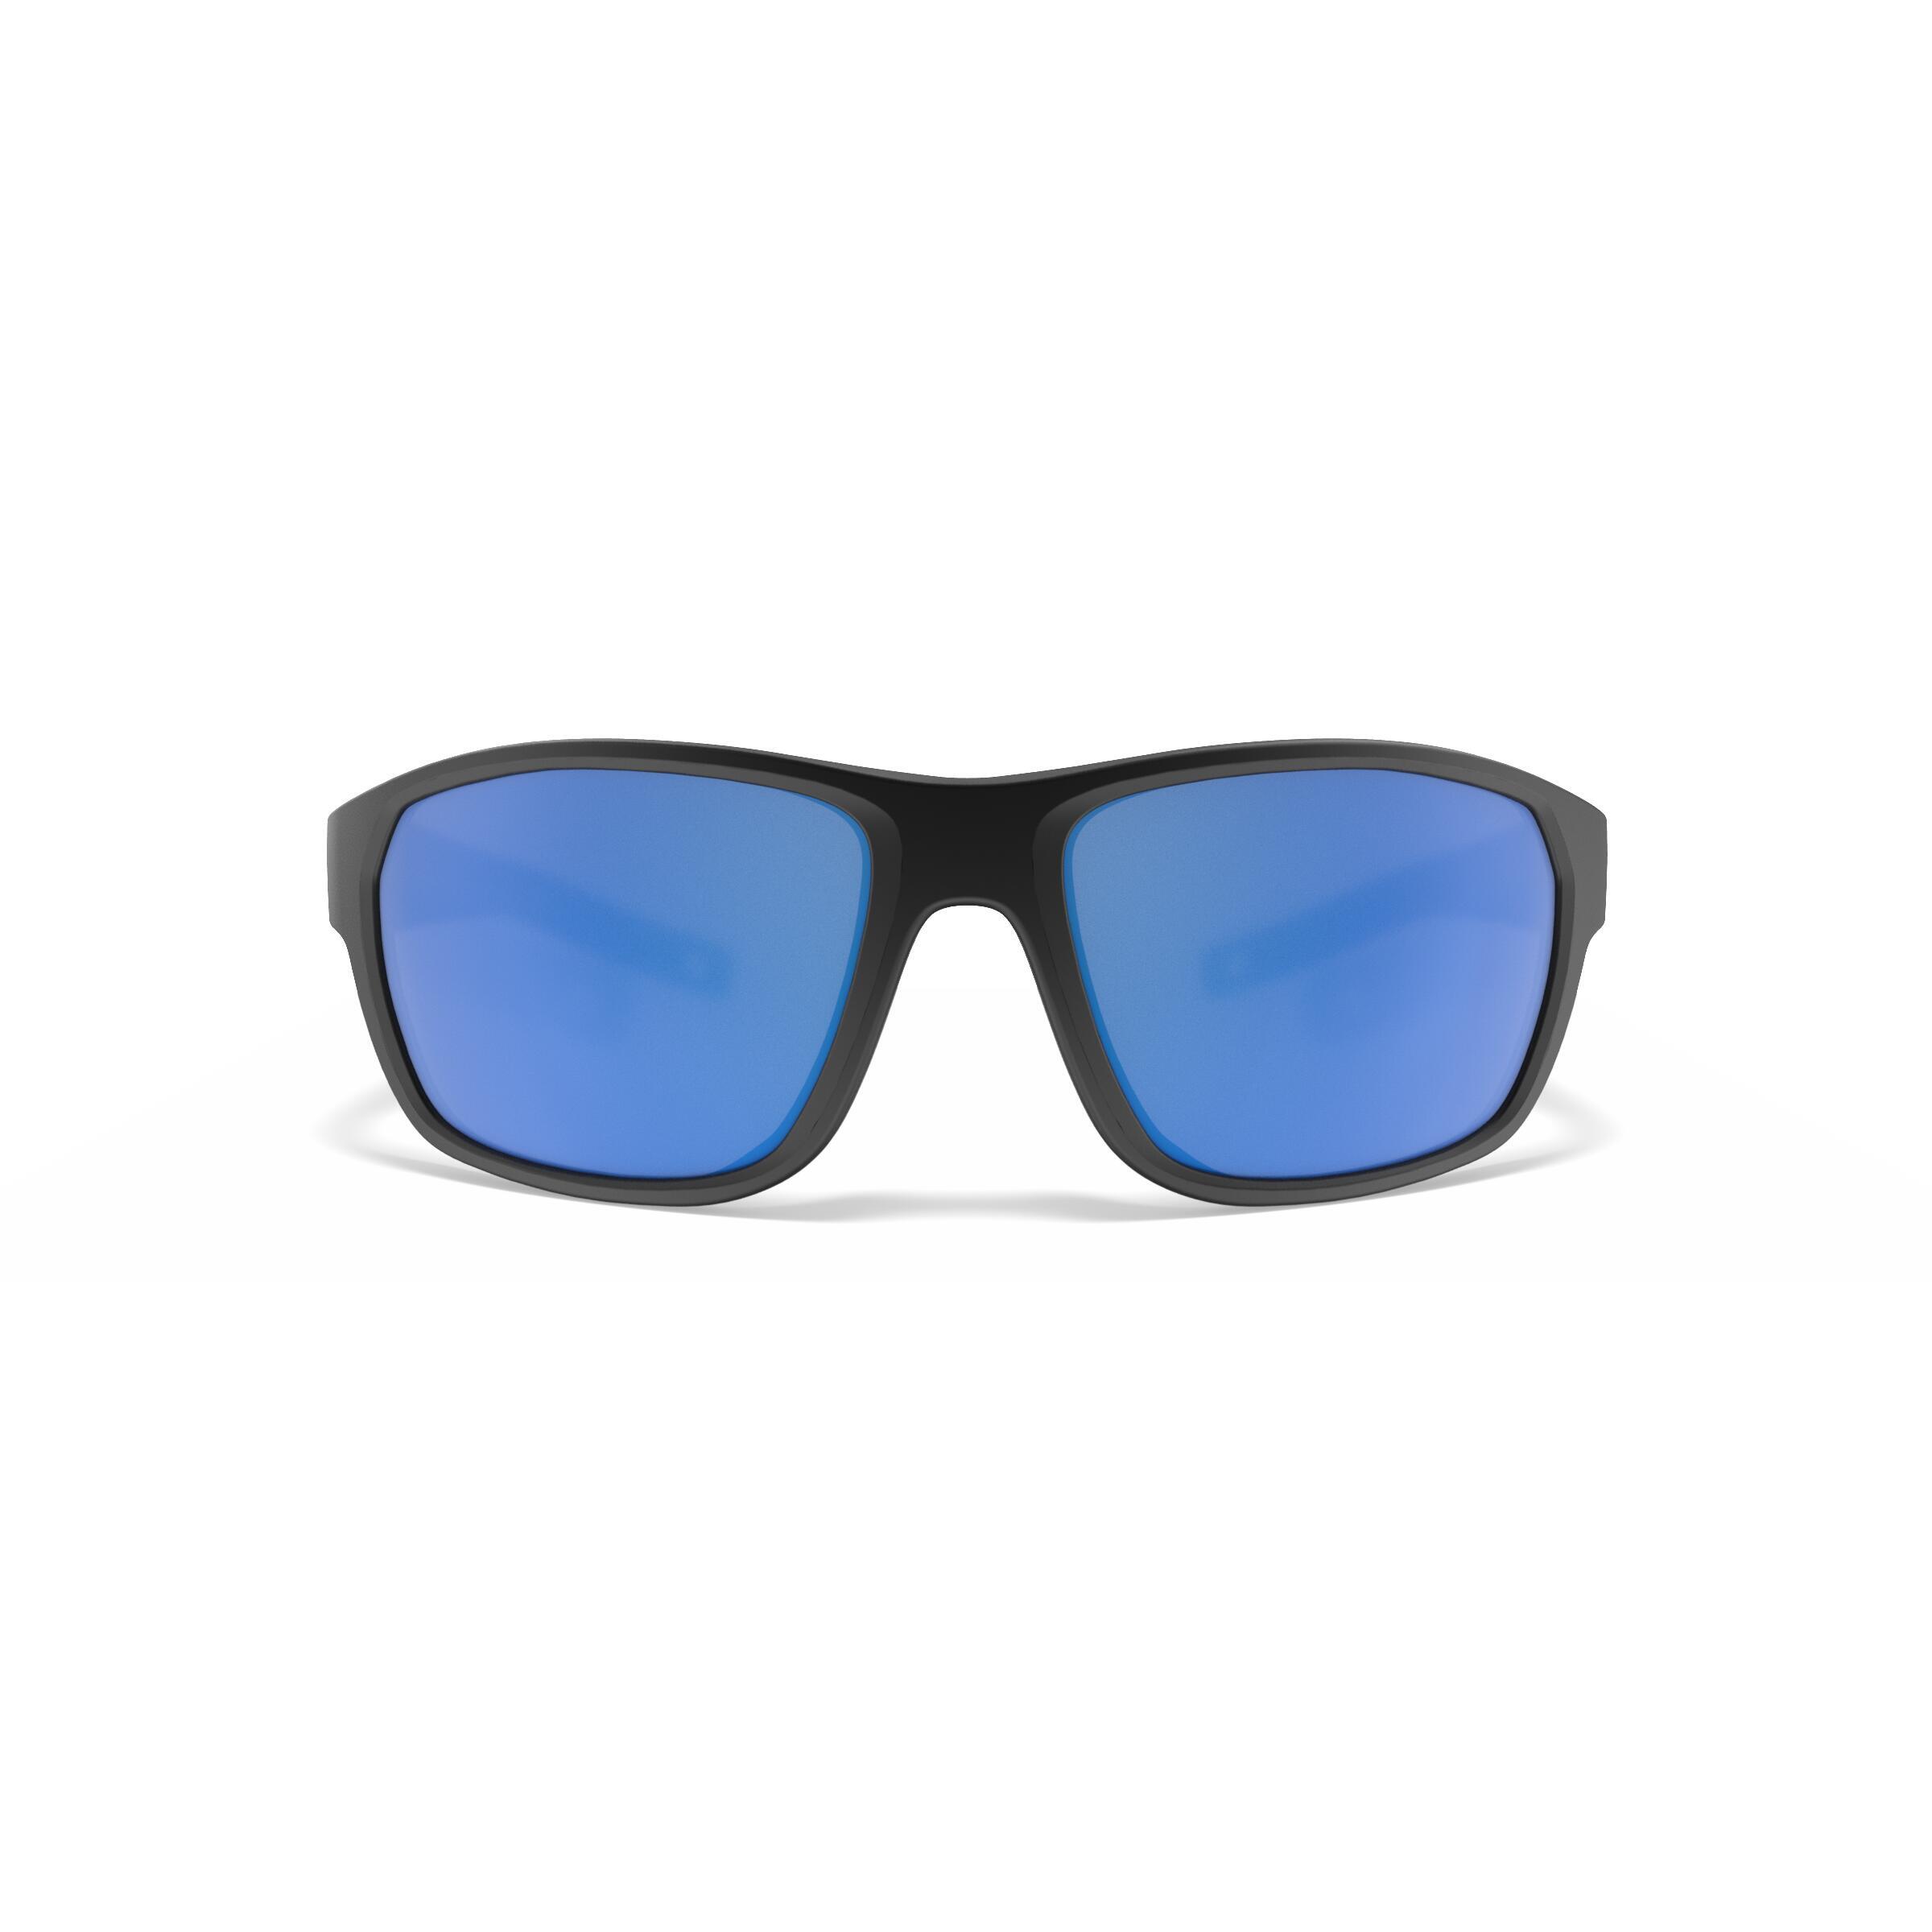 Adult Sailing Floating Polarised Sunglasses 500 - Size M Black 7/12